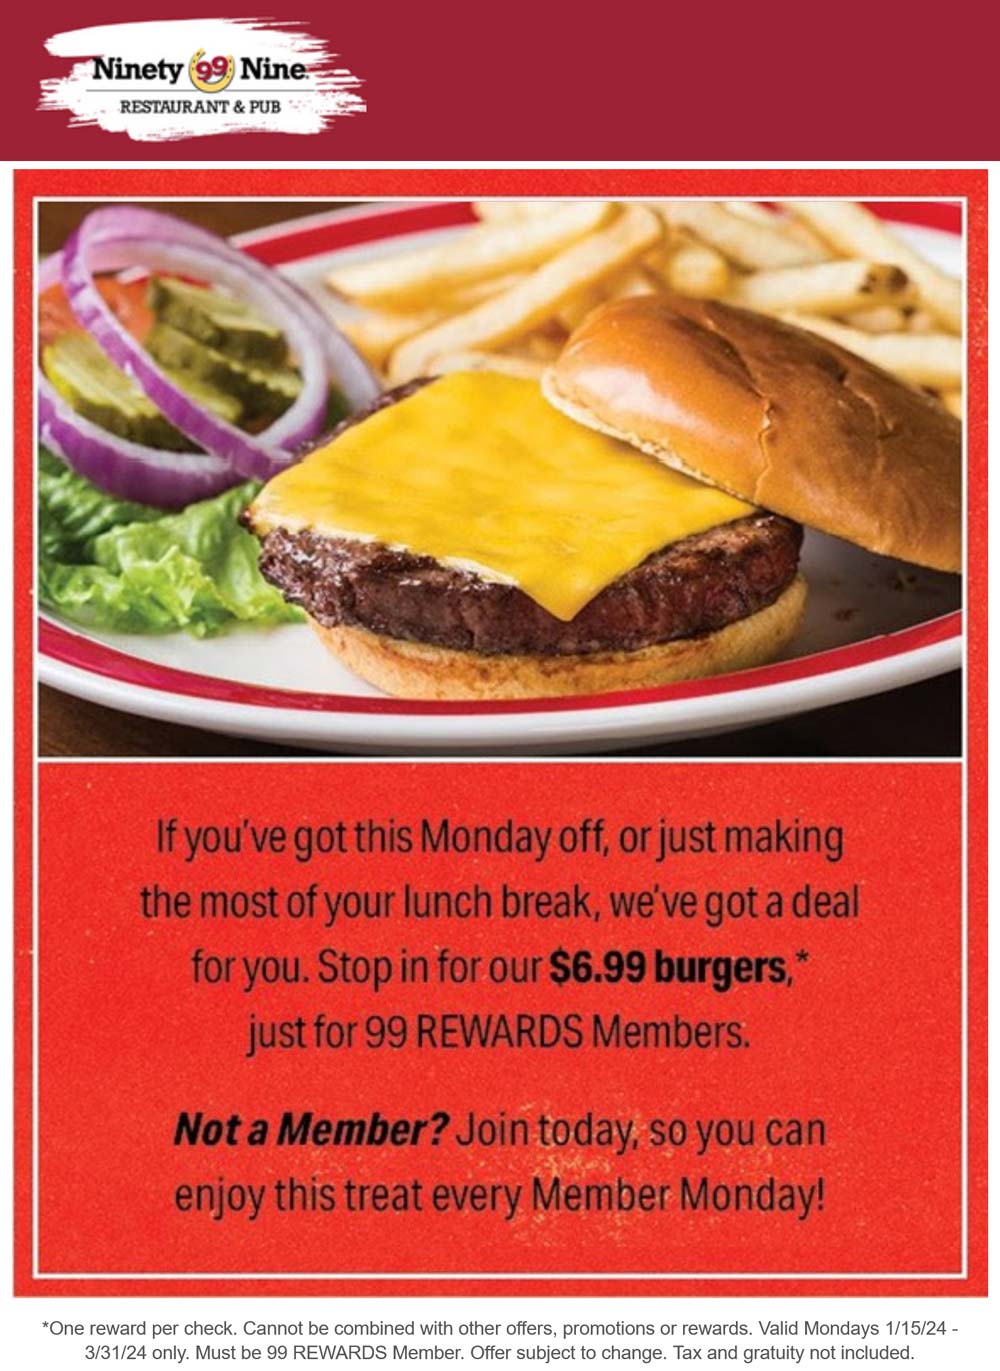 99 Restaurants restaurants Coupon  $7 cheeseburger meals Mondays at 99 Restaurants #99restaurants 